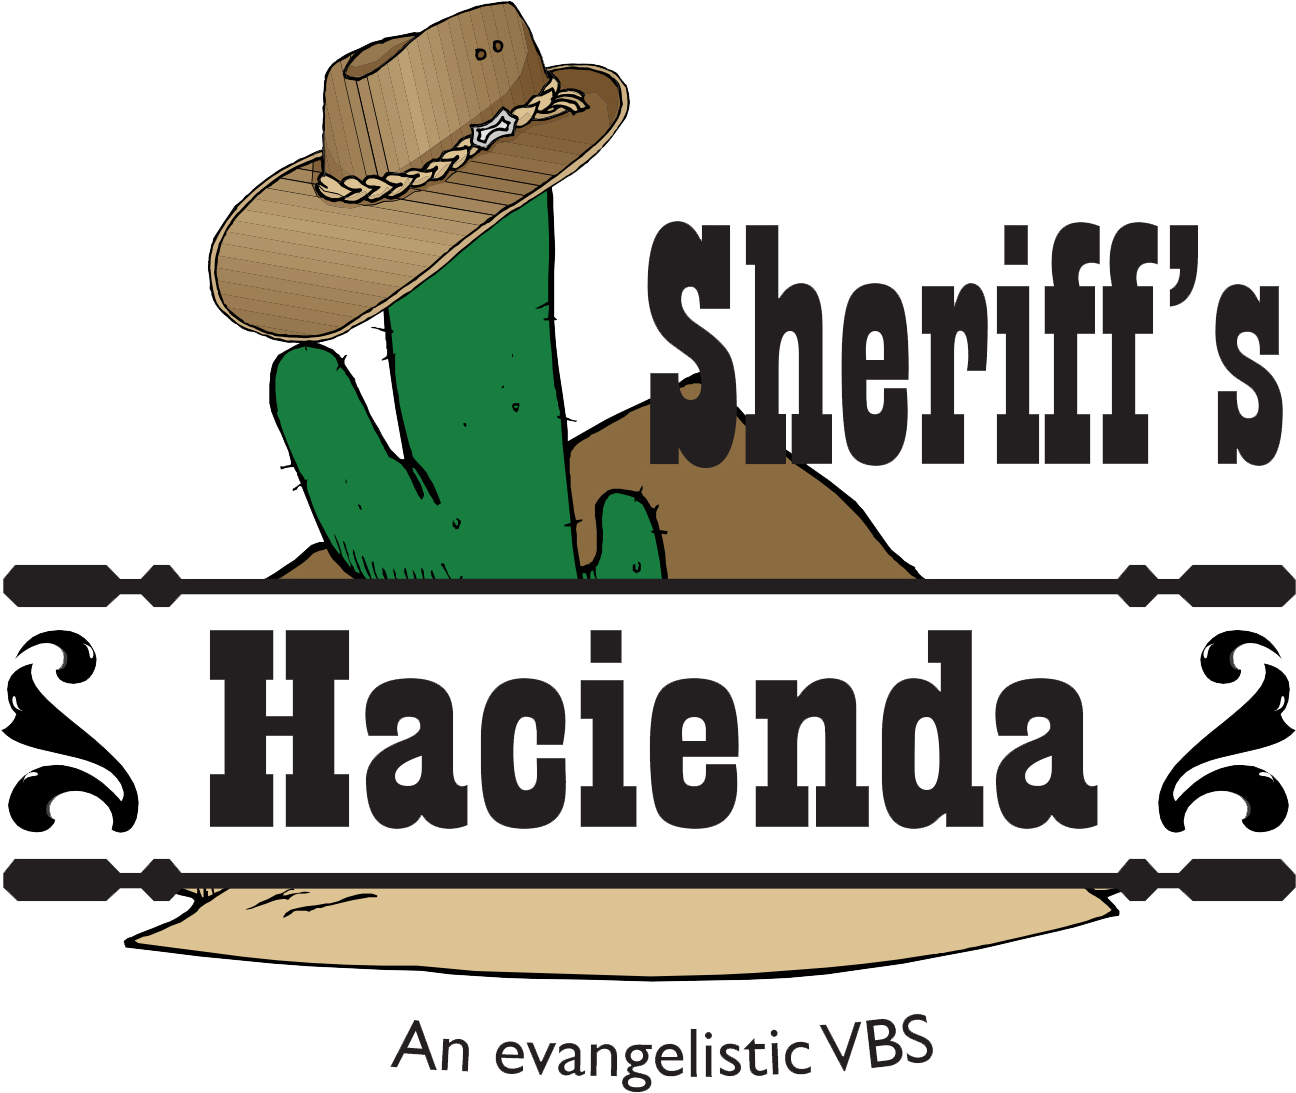 Sheriffs Hacienda Evangelistic V B S Logo PNG image